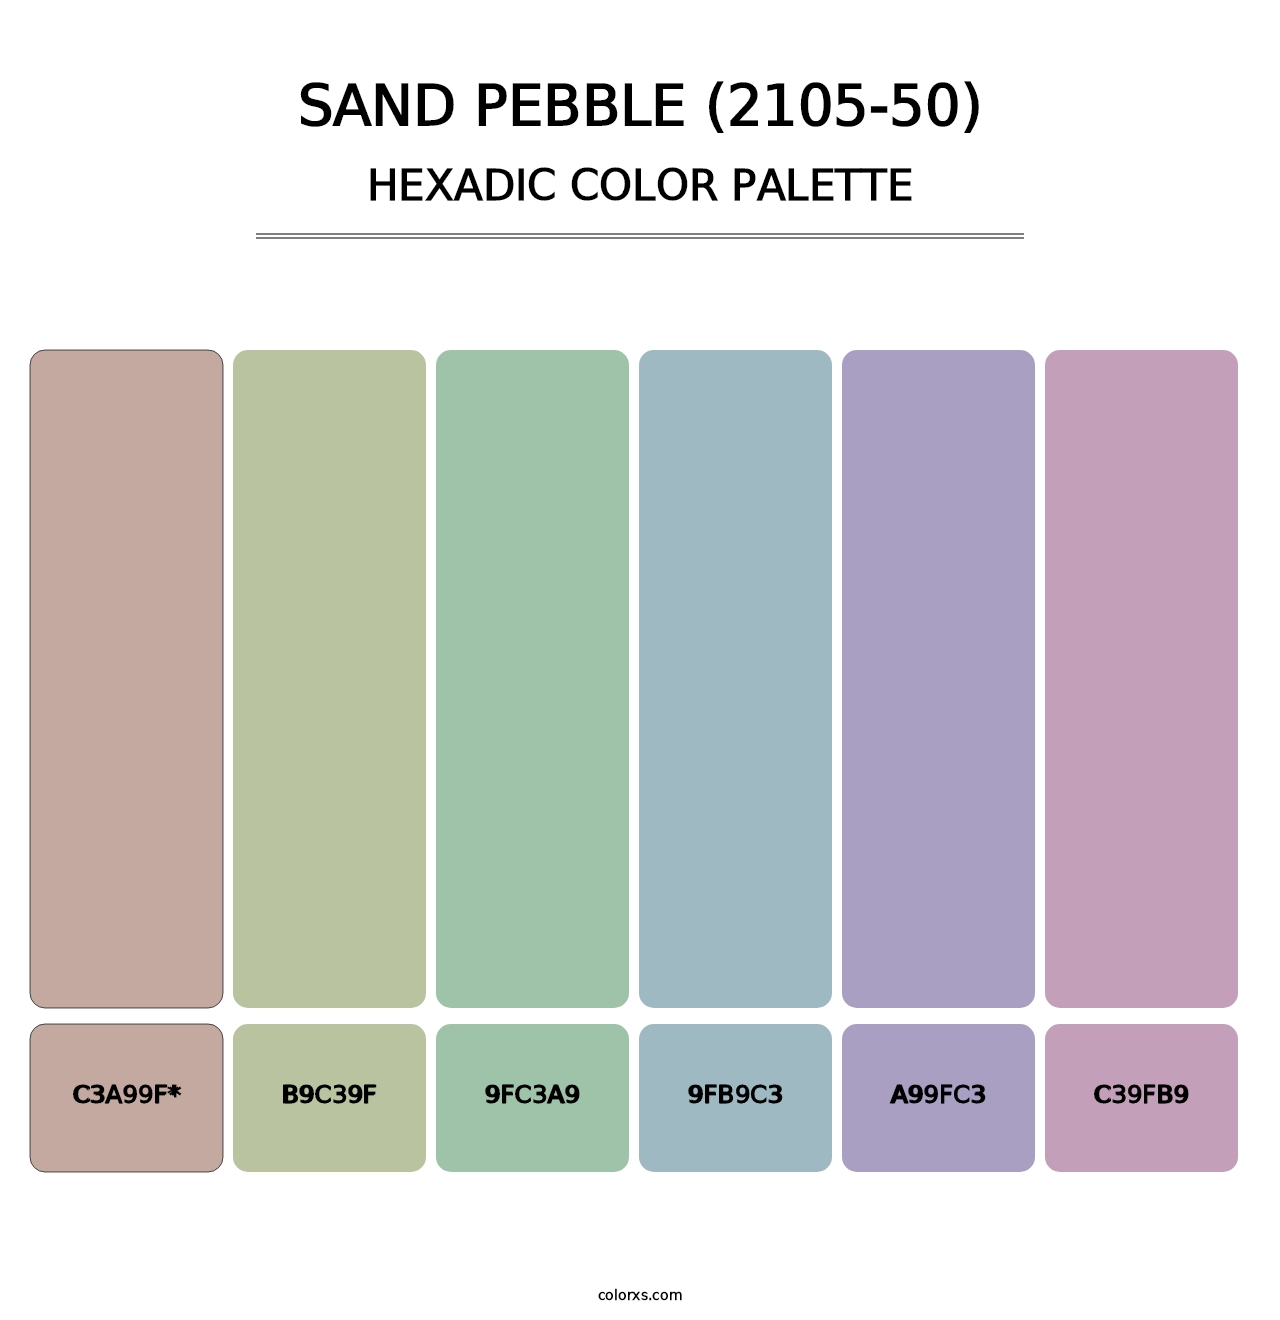 Sand Pebble (2105-50) - Hexadic Color Palette